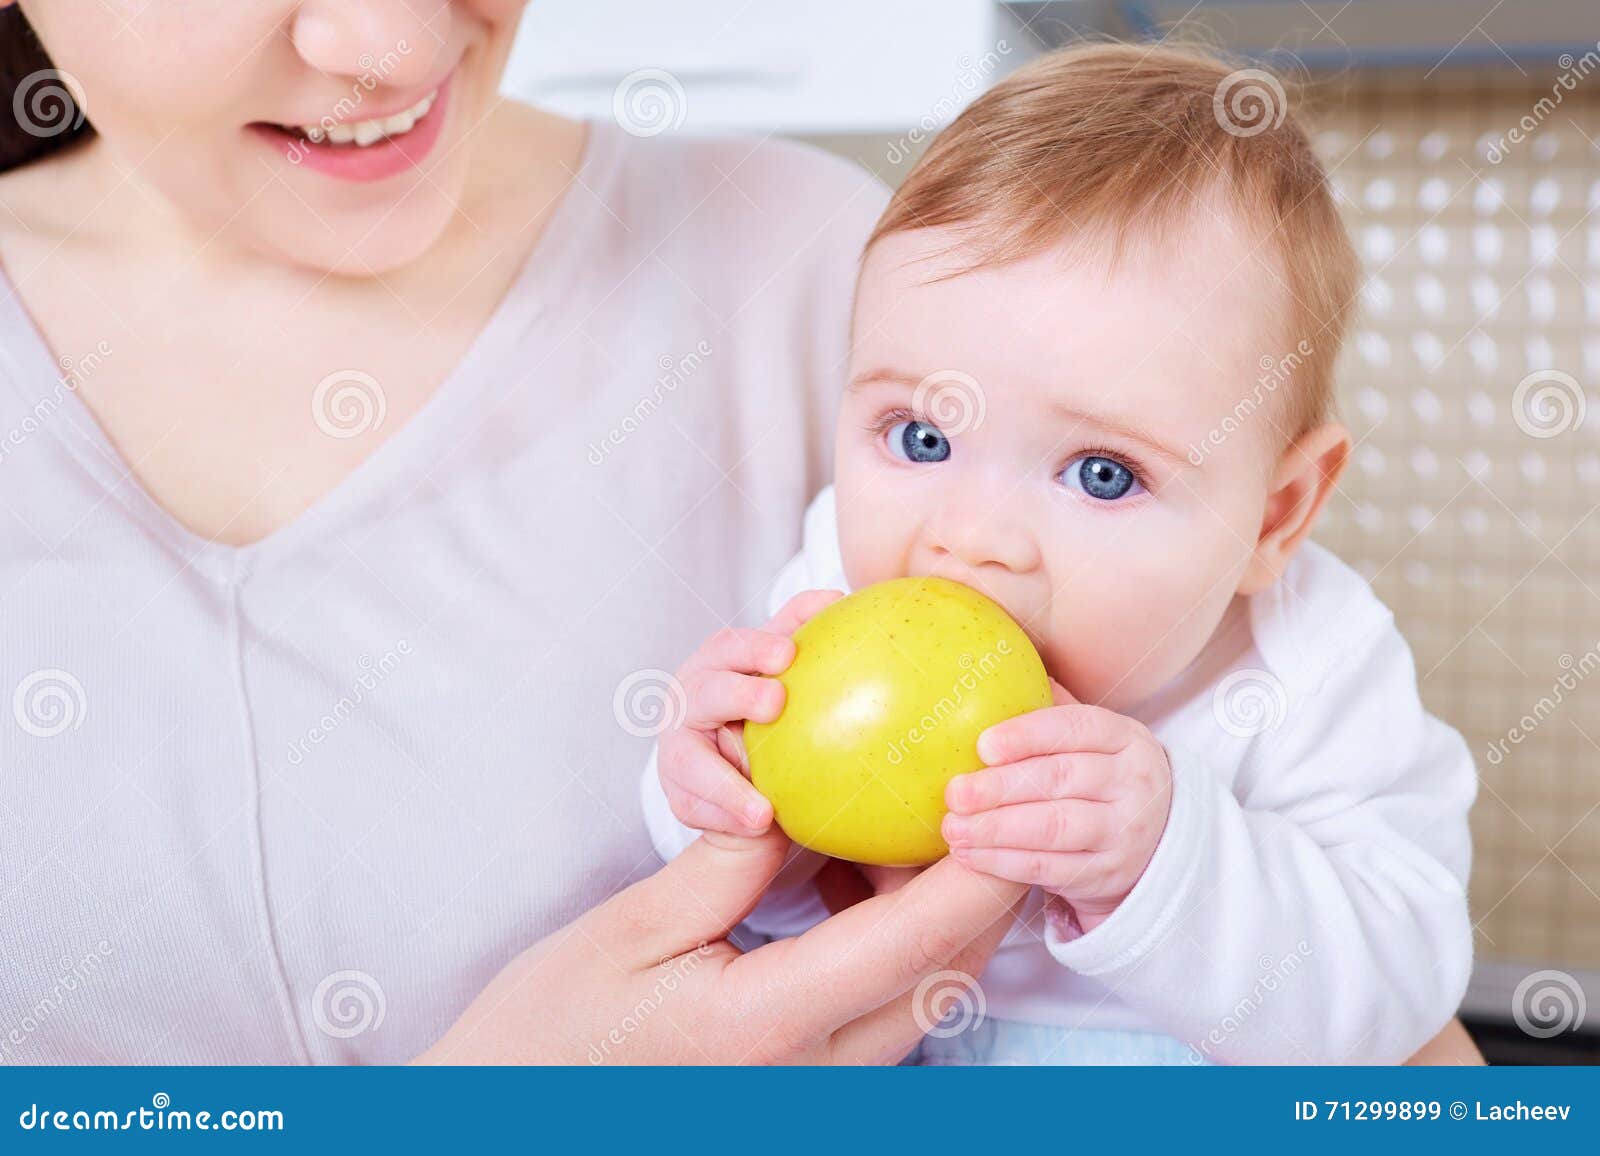 baby eats yellow apple.child